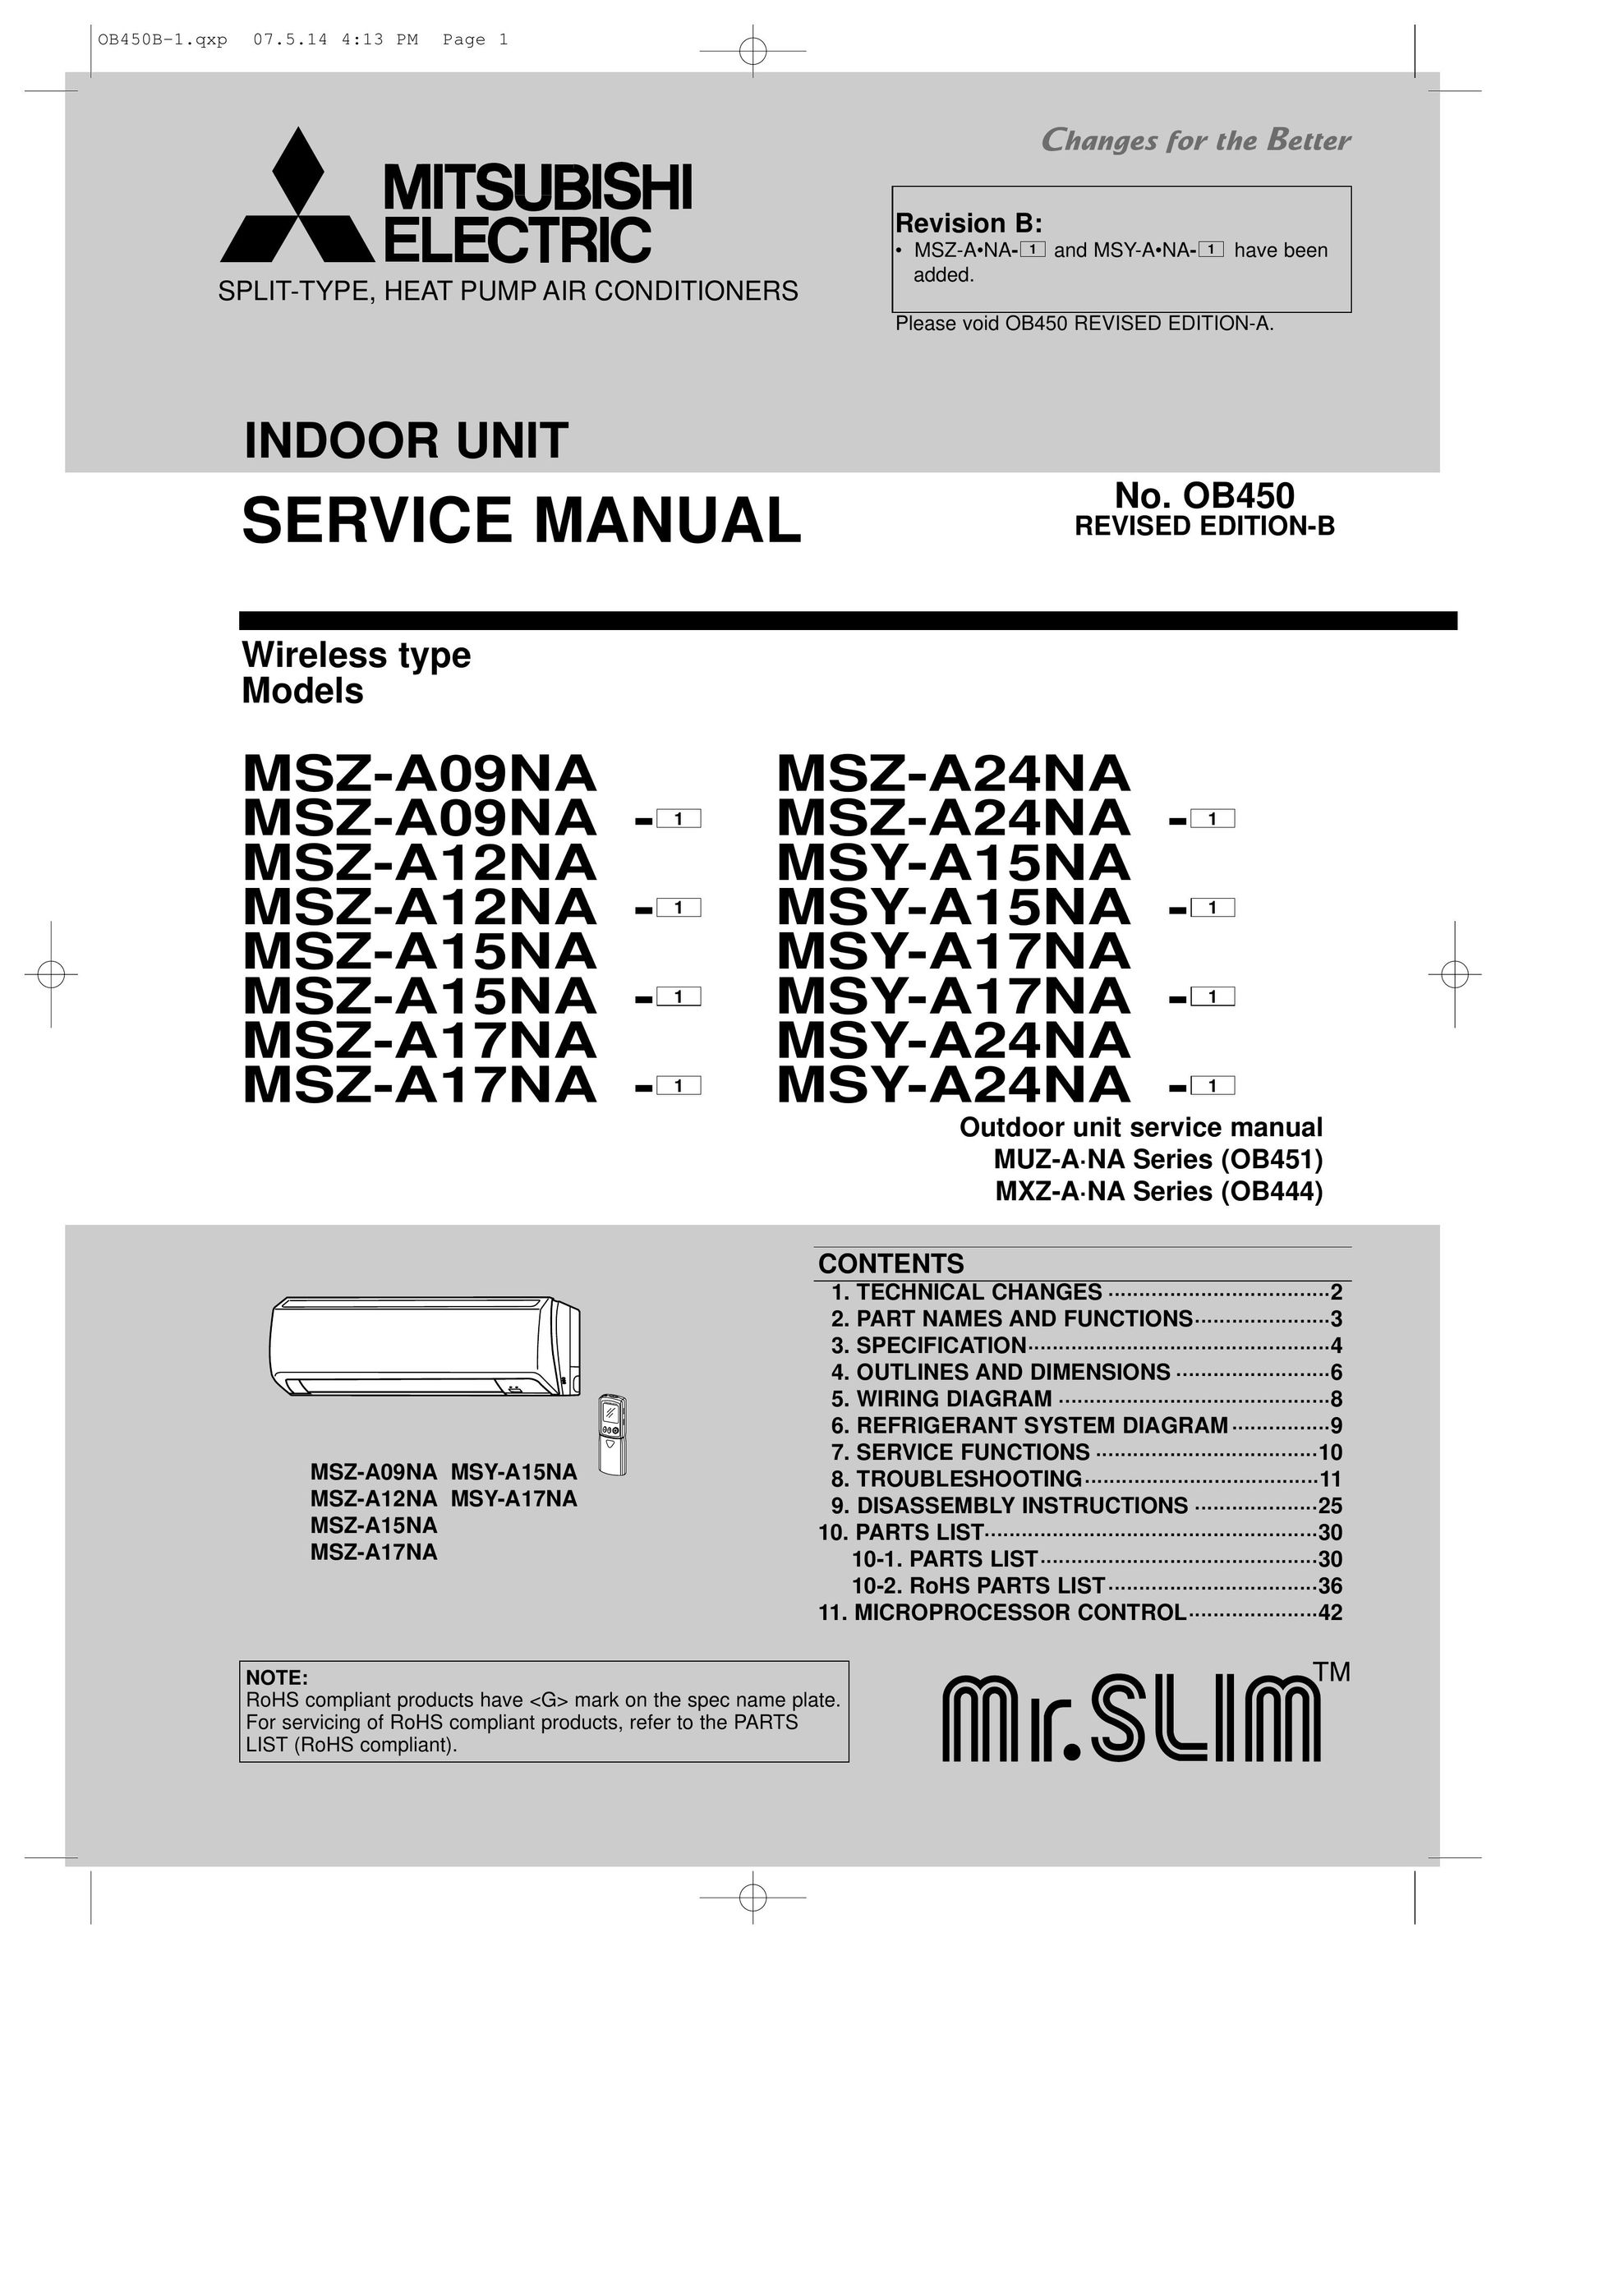 Mitsubishi Electronics MSY-A15NA Heat Pump User Manual